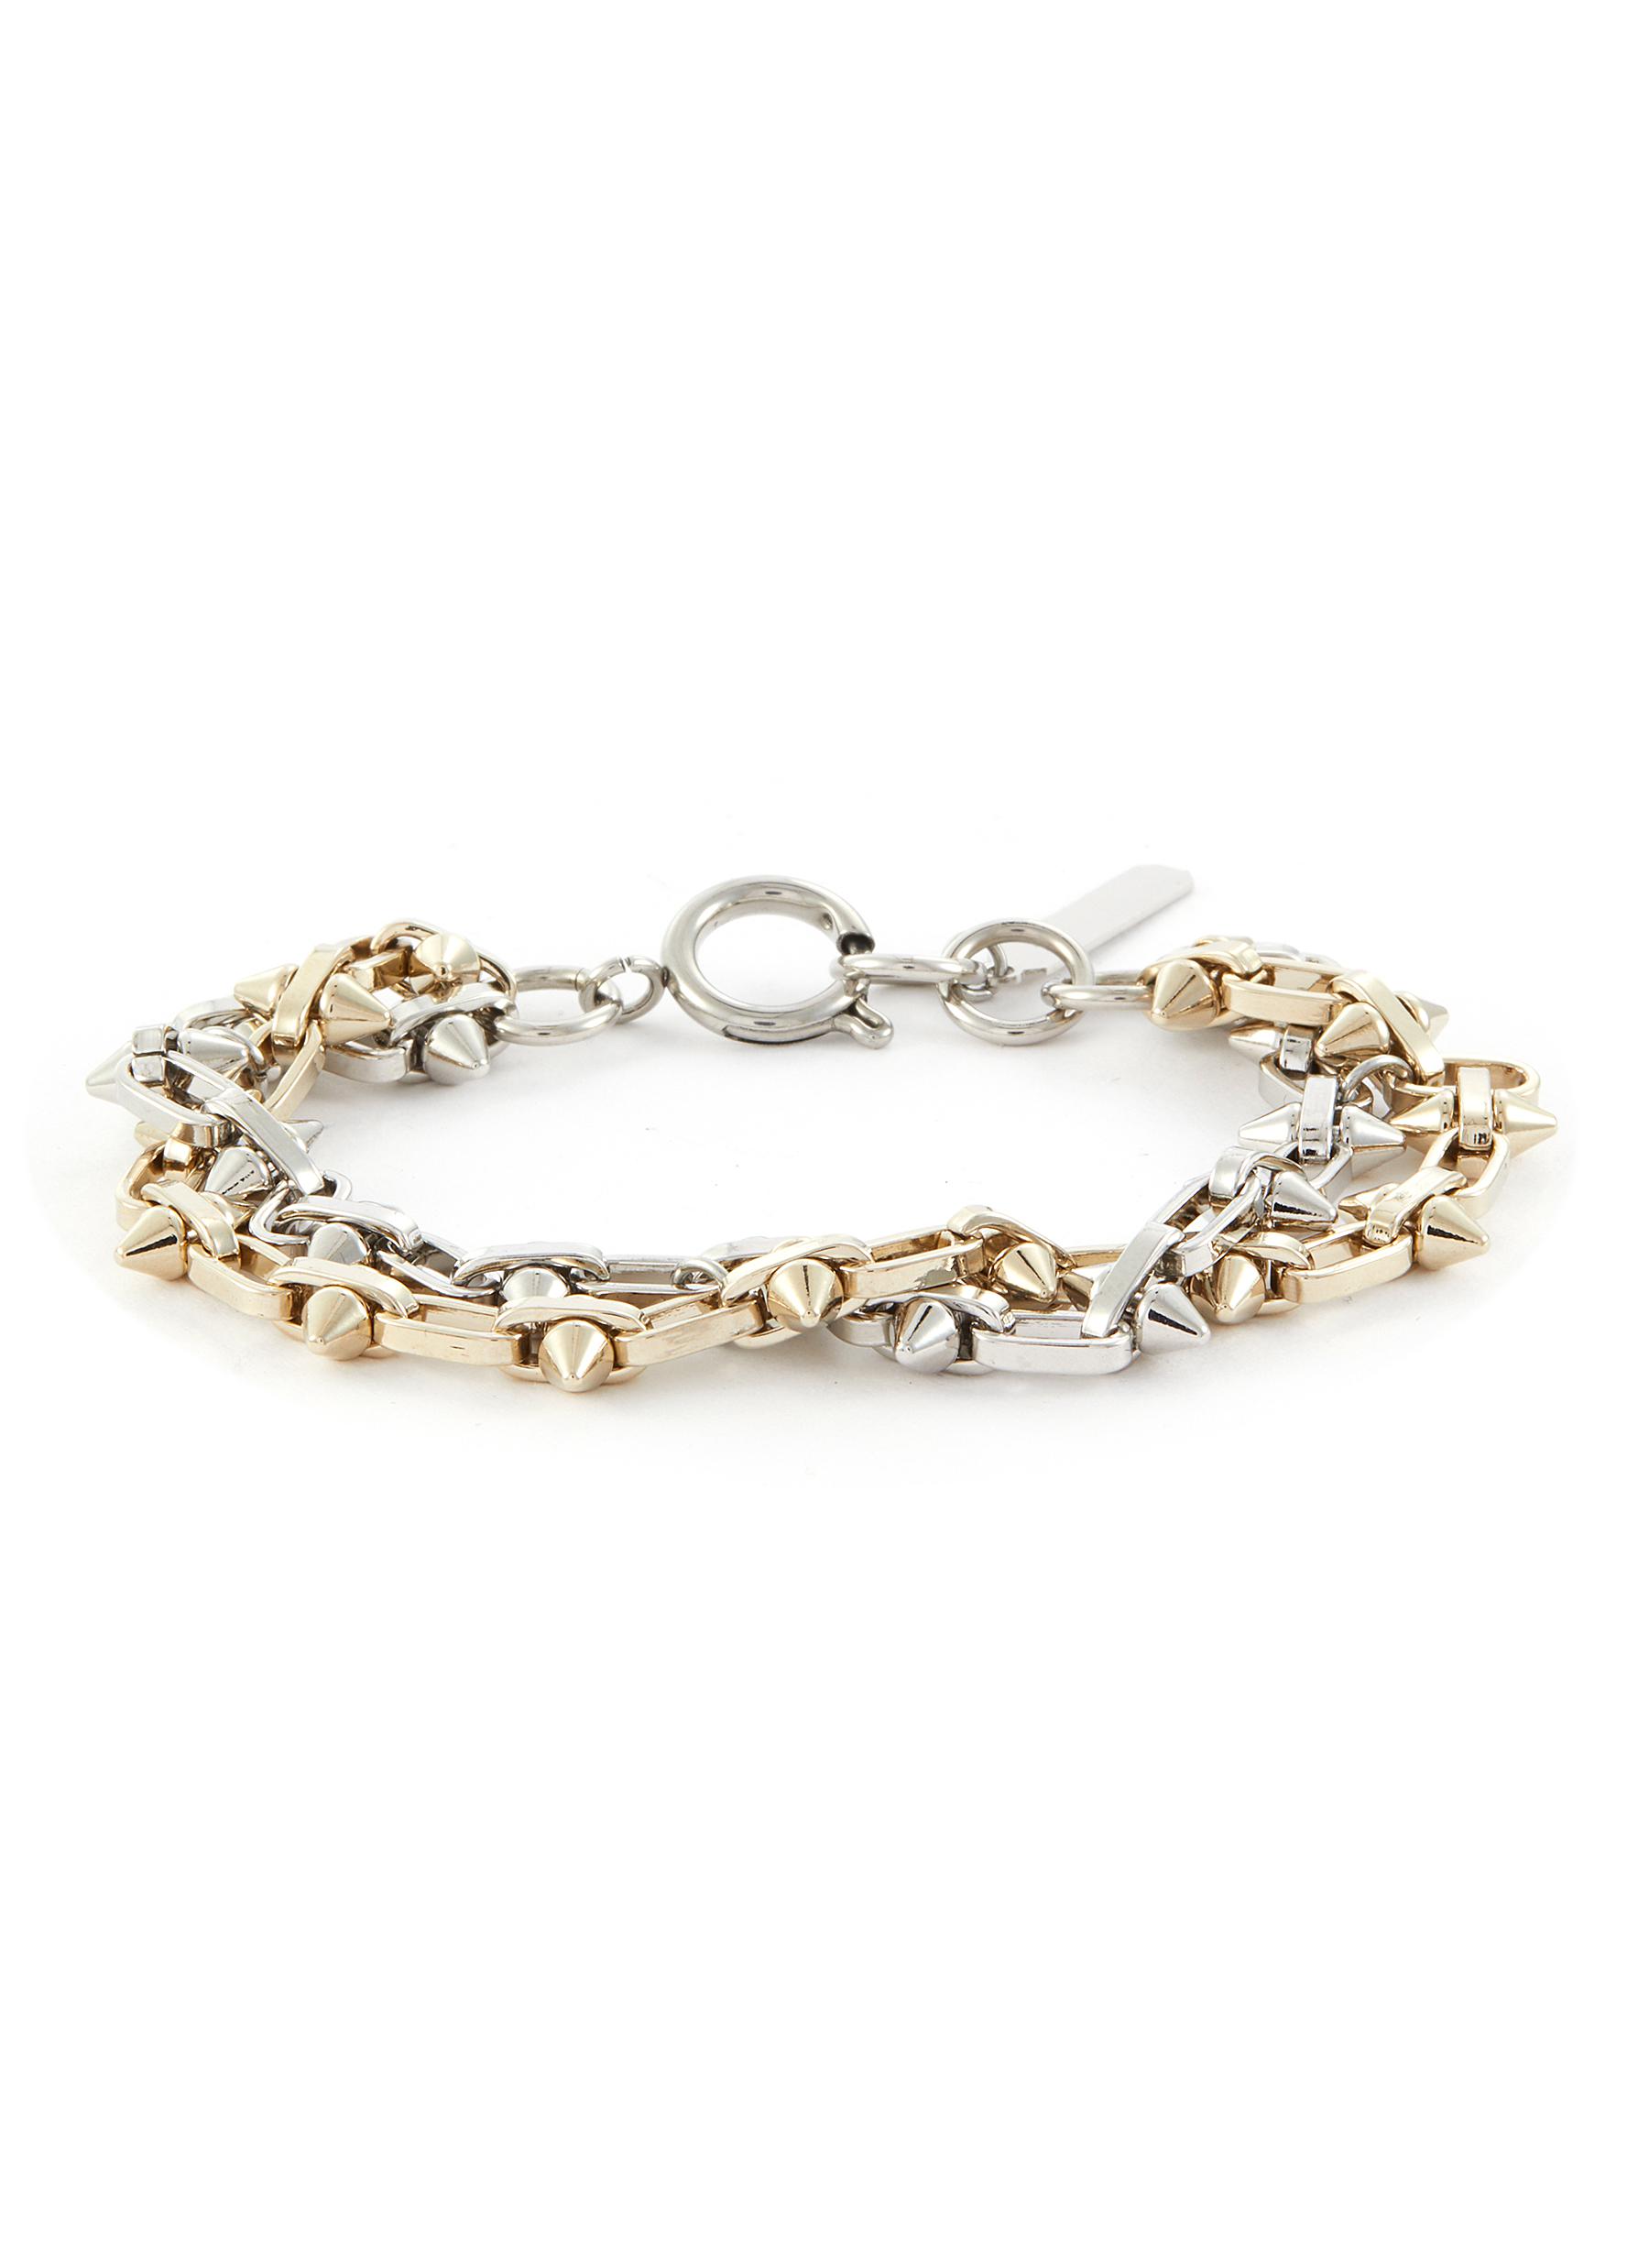 Statement Stainless Steel Chain Bracelet for Women, Vantage 18k Gold Plated  Elegant Jewerlry - AliExpress